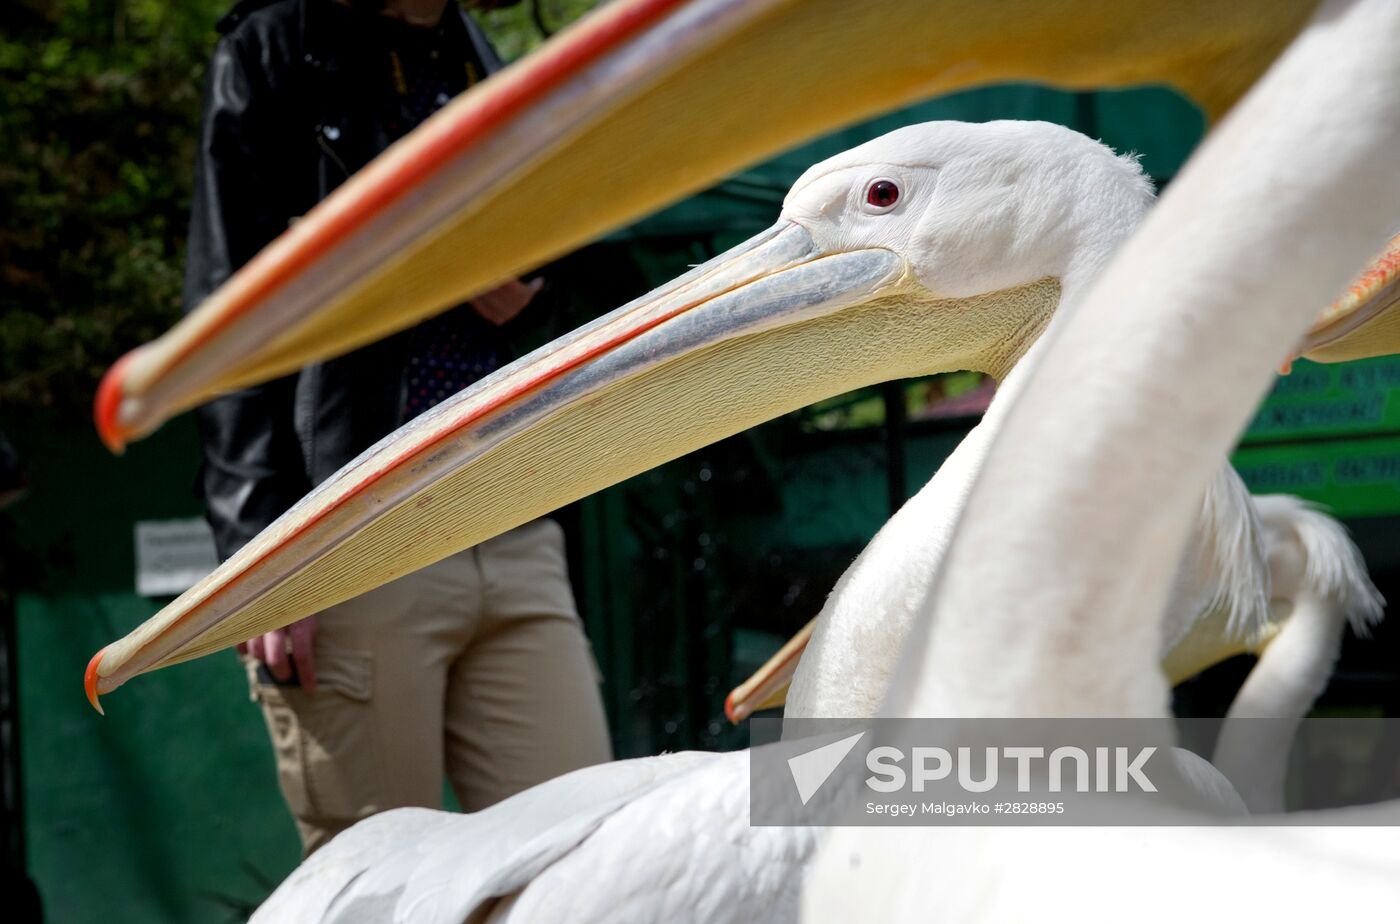 Zoo "Fairytale" opens in Crimea